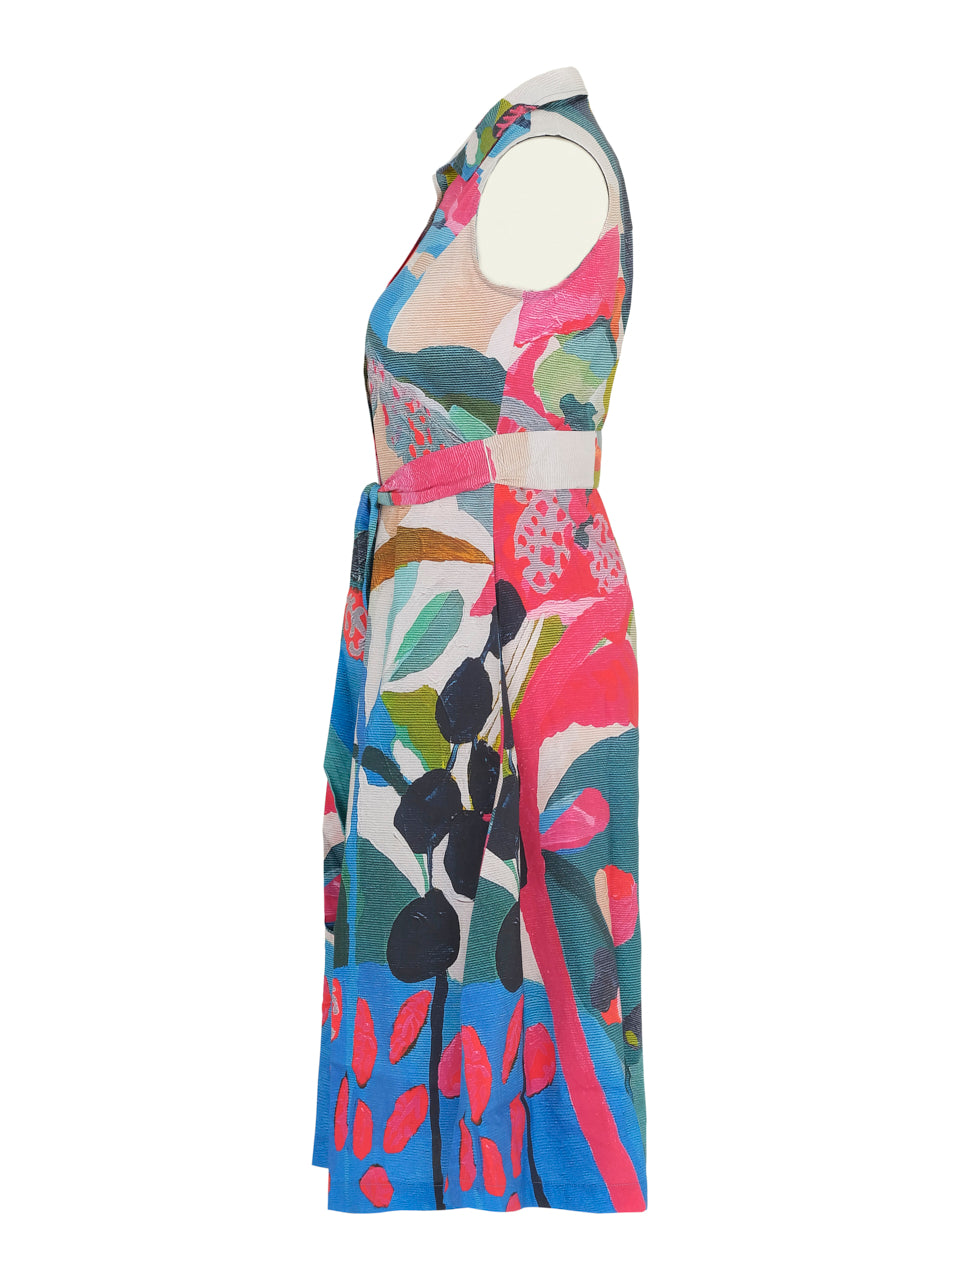 Abstract 'Rumba' Print Sleeveless Shirt Dress with Tie Waist